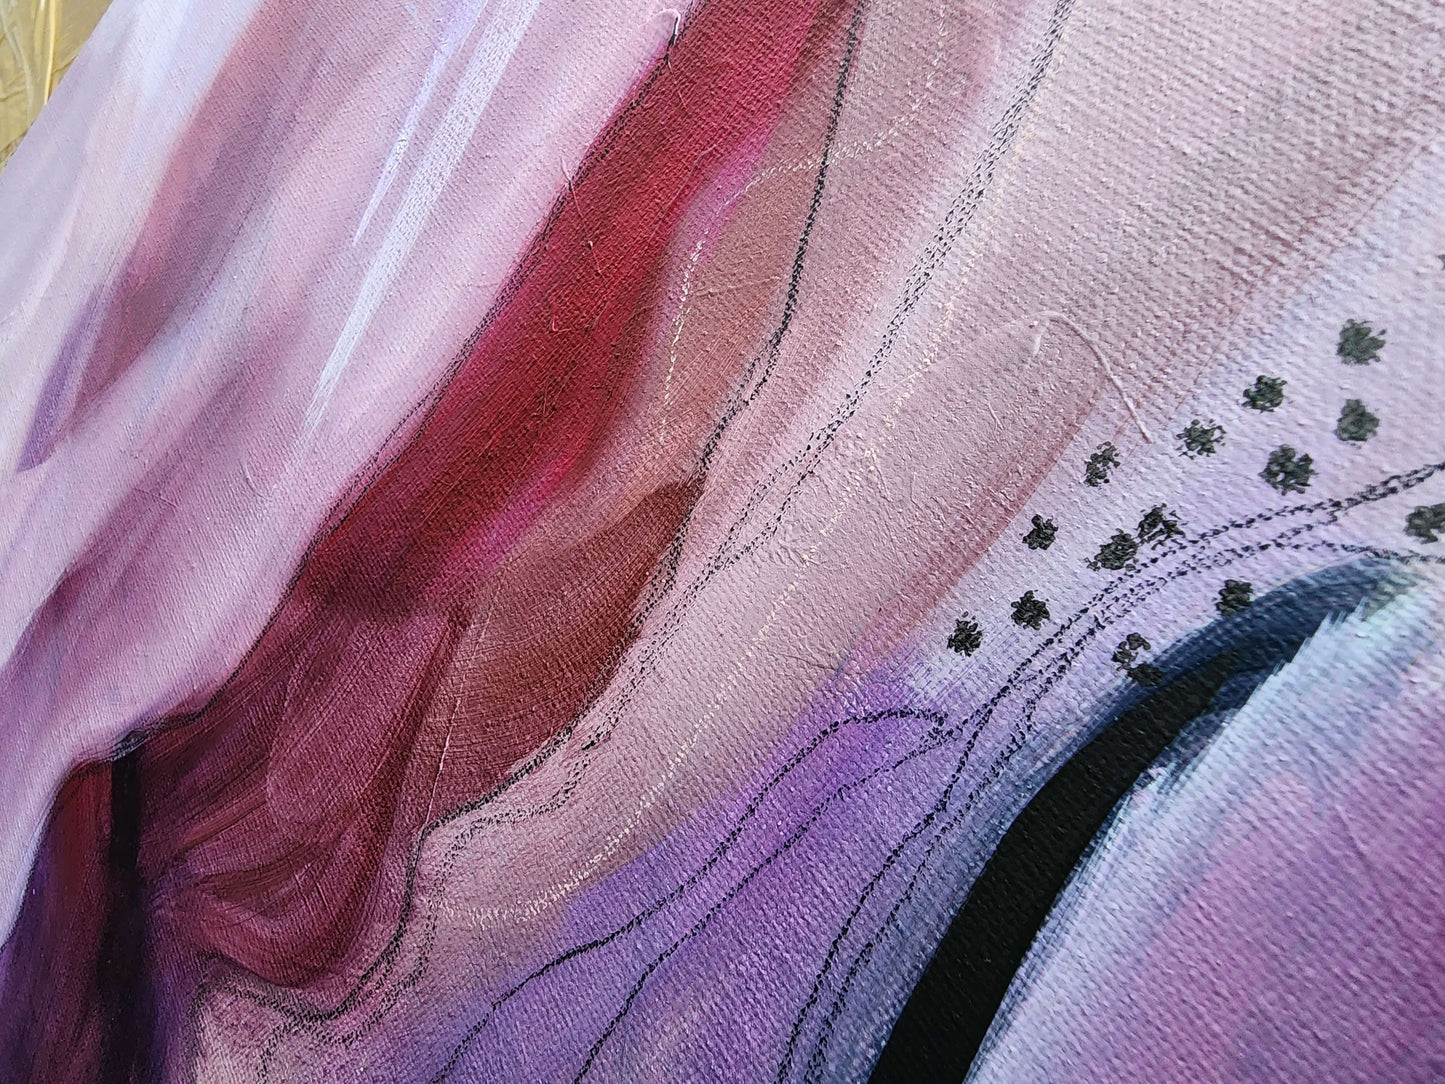 Desert Sunset - Muted Violet Purple Original Abstract Art Painting 16x20